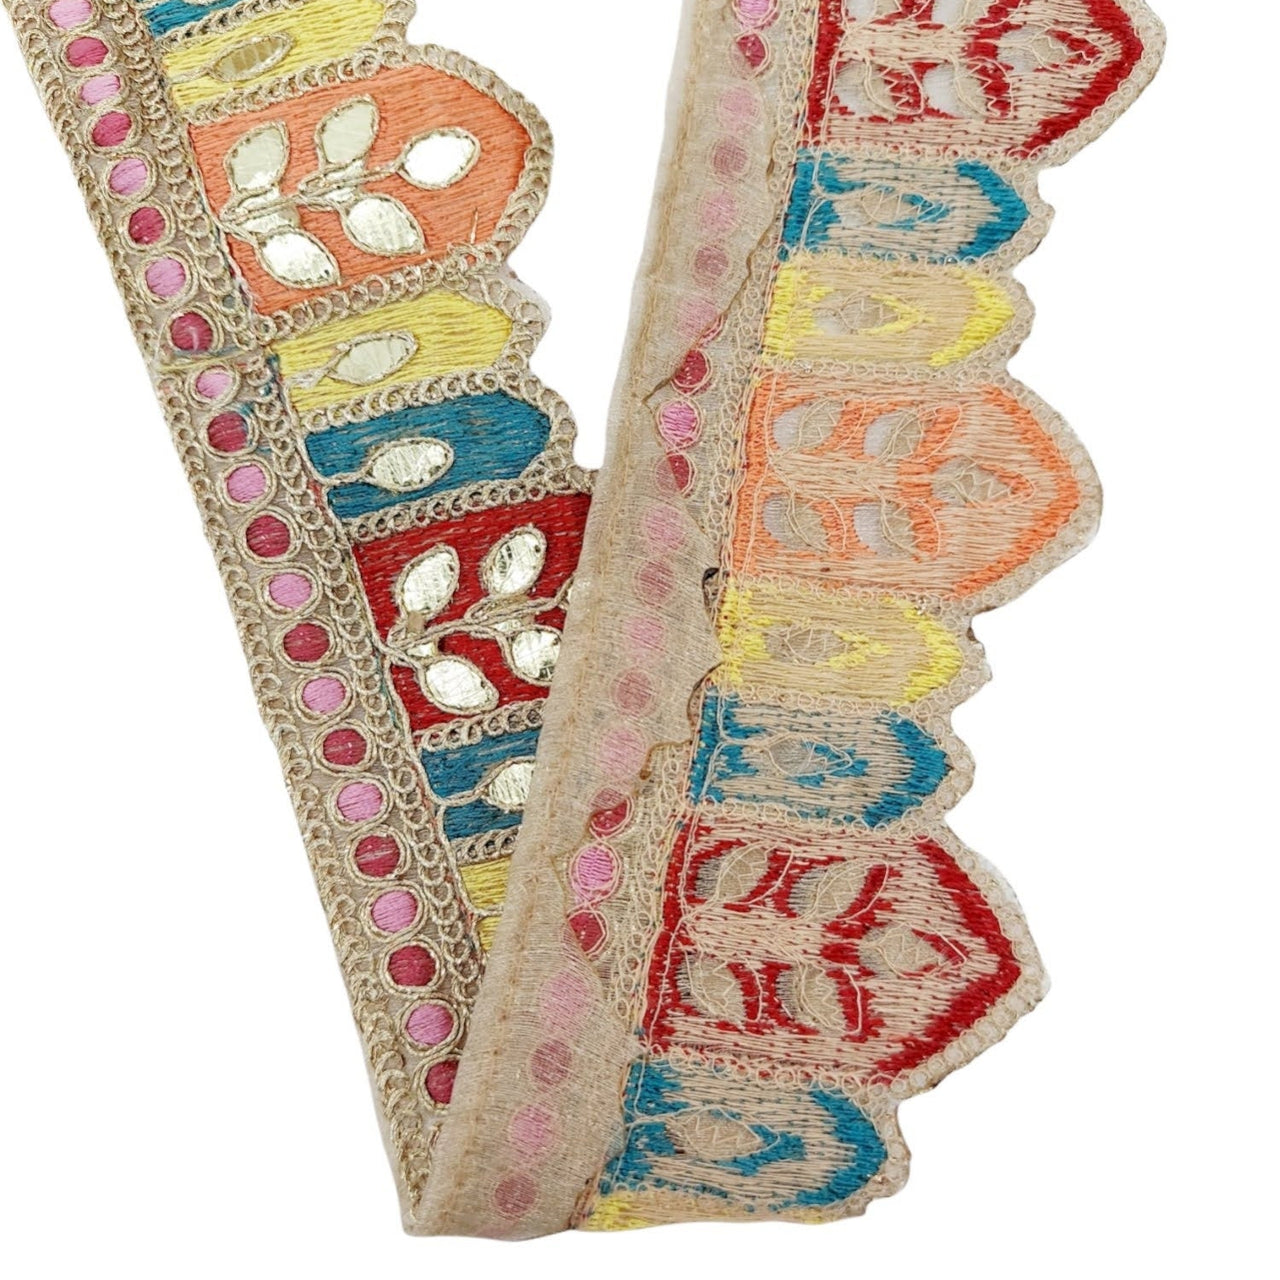 9 Yards Sheer Gold Tissue Fabric Scalloped Lace Trim, Indian Gold Foil Work Embroidery Gota Patti Sari Border Decorative Trim Craft Lace